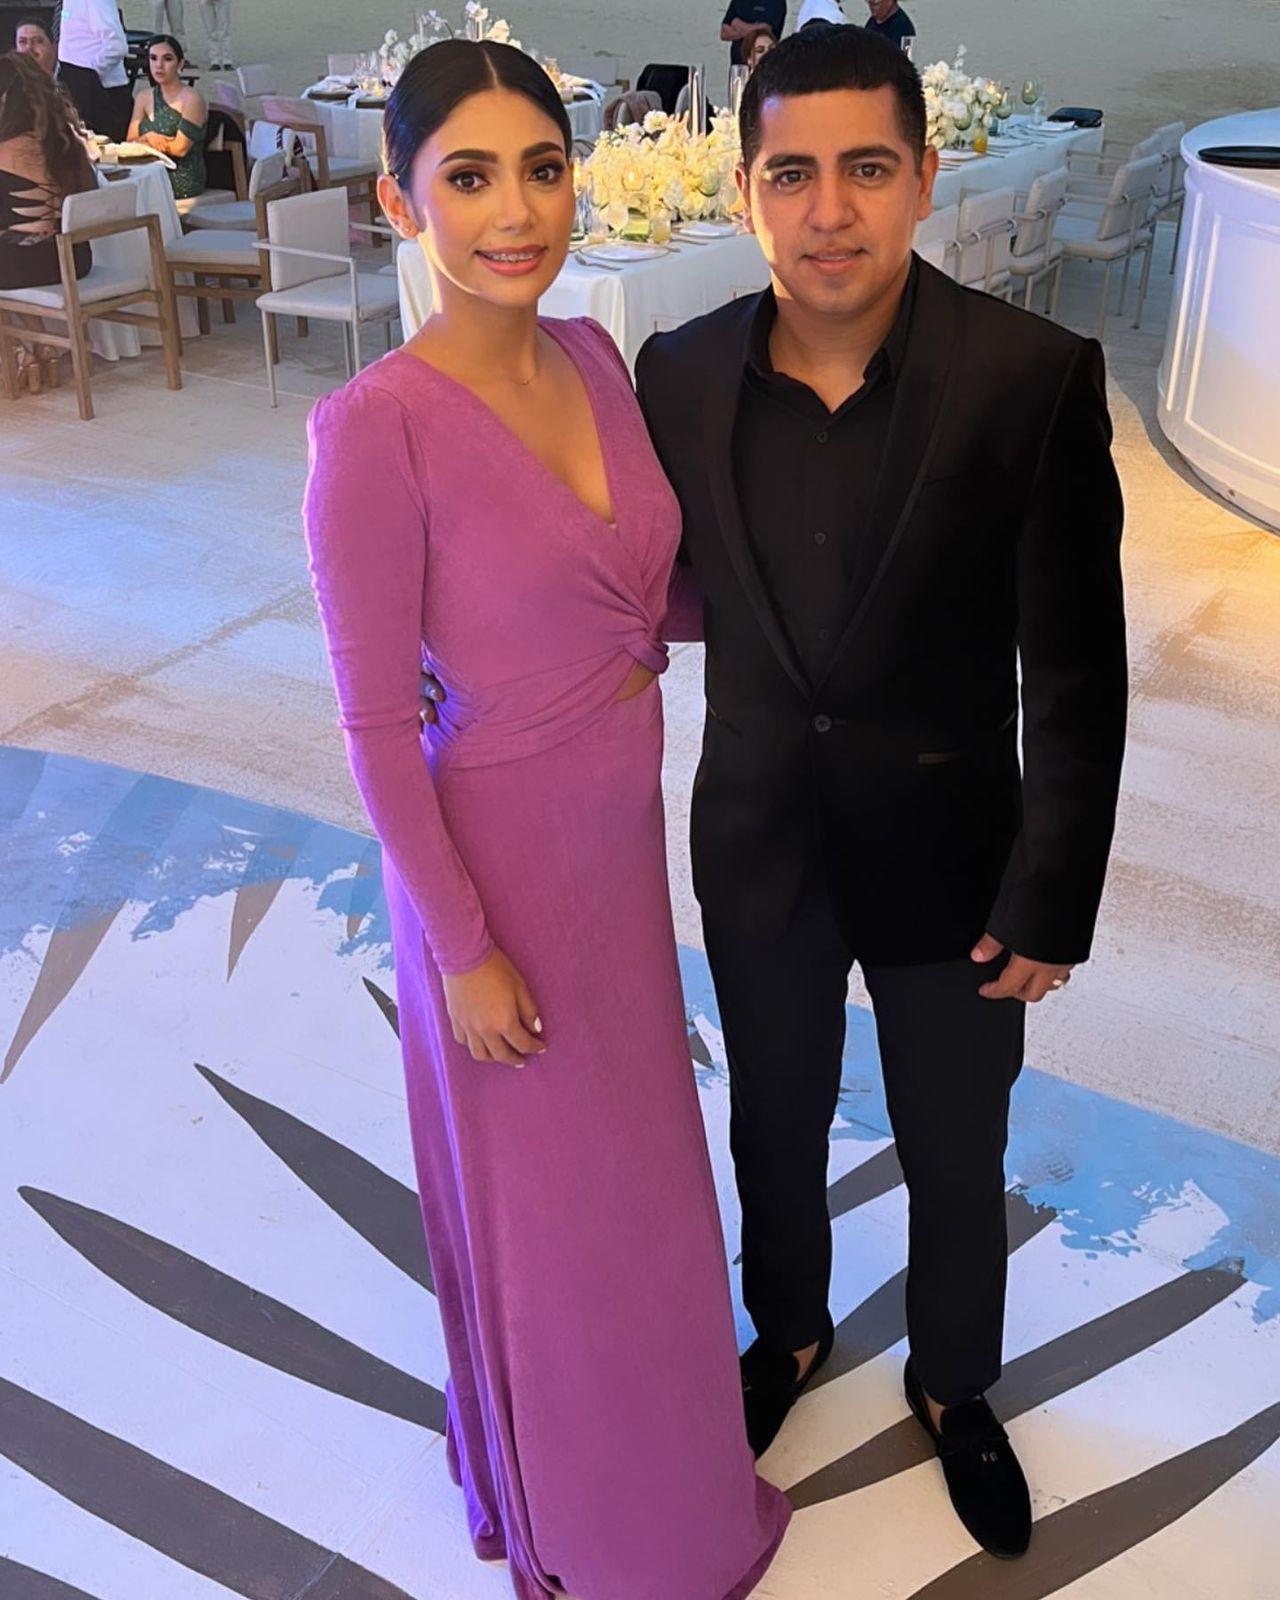 $!Javier Osuna, músico de Banda MS, con su esposa Lorena Zatarain.